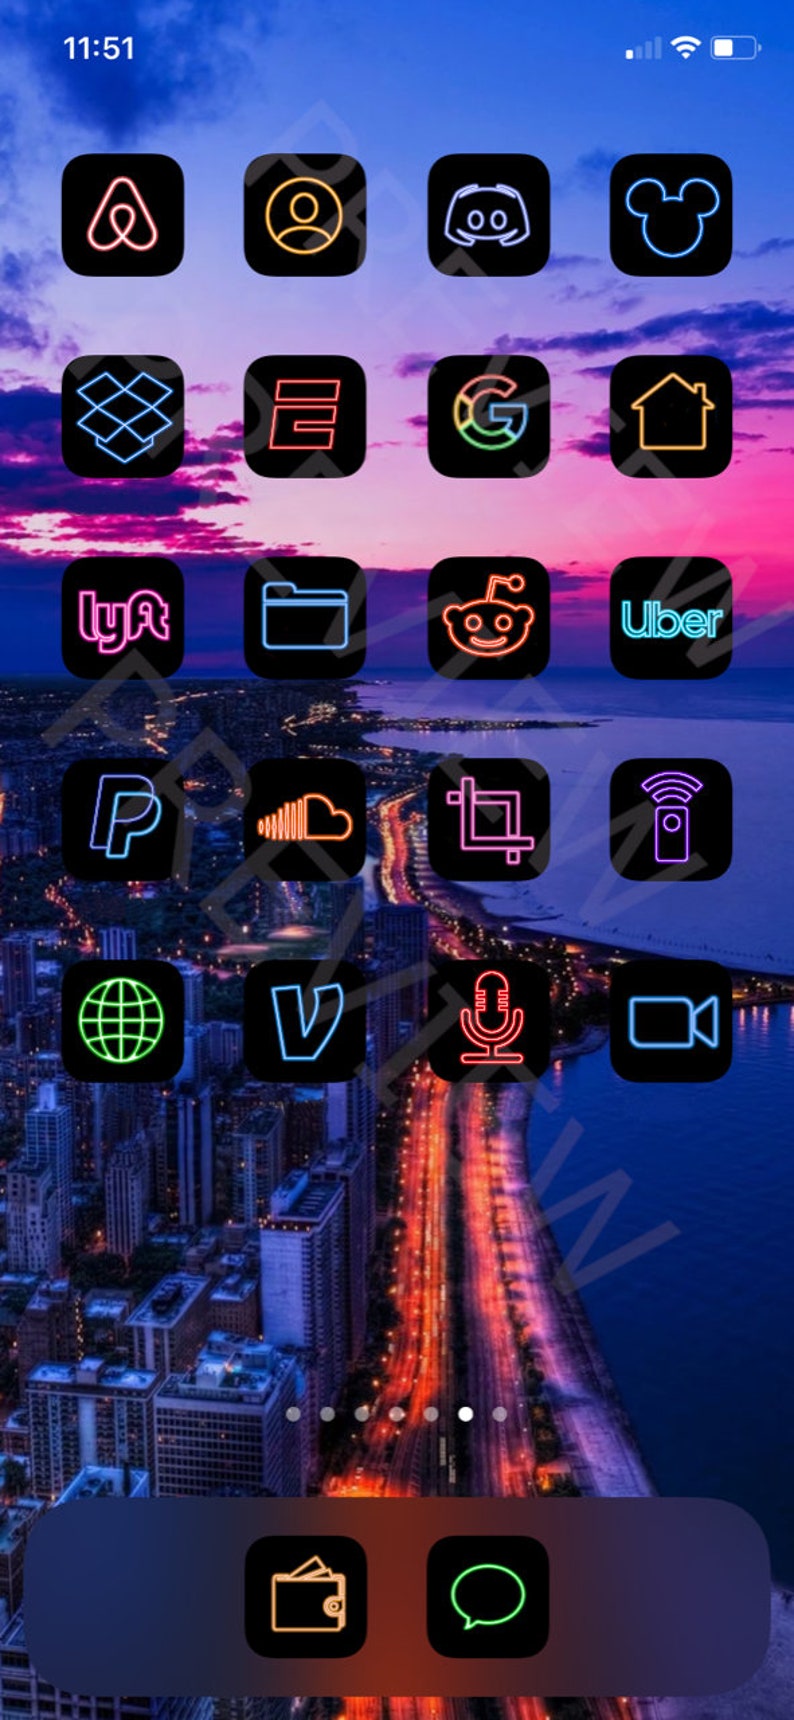 IOS 14 App Icon Pack Neon Aesthetic iOS 14 Icons iPhone | Etsy